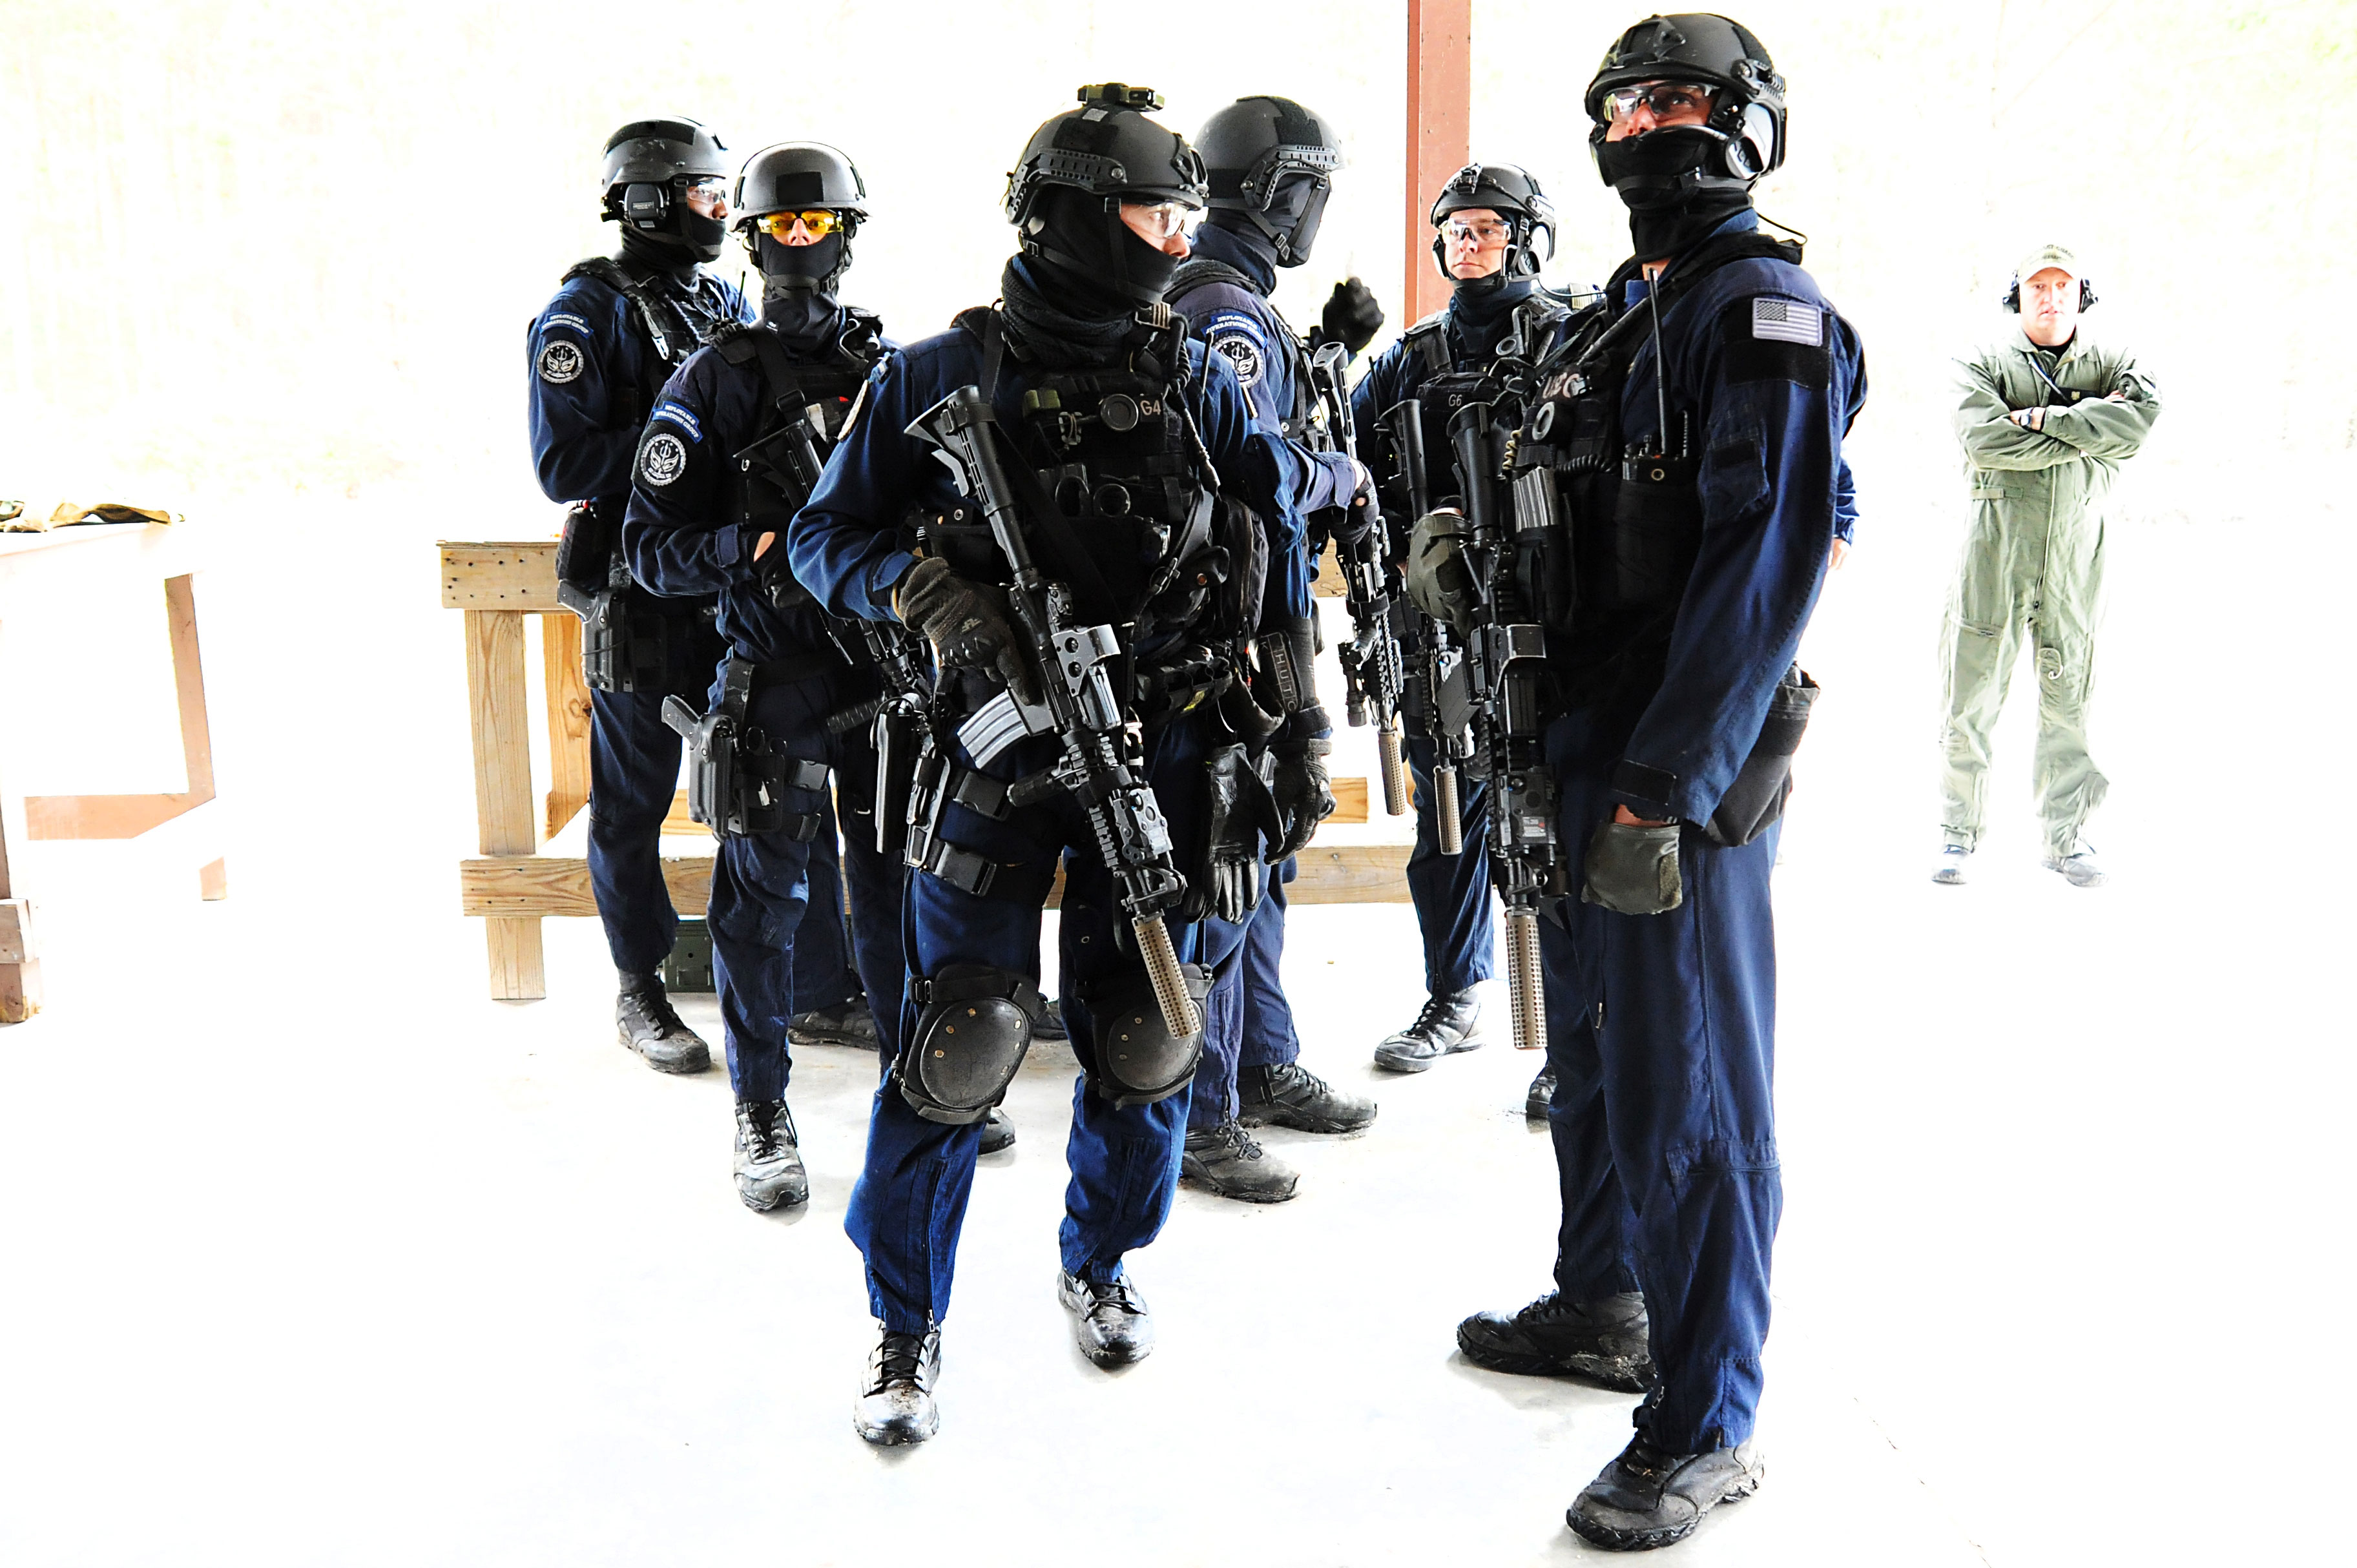 USCG Maritime Security Response Teams